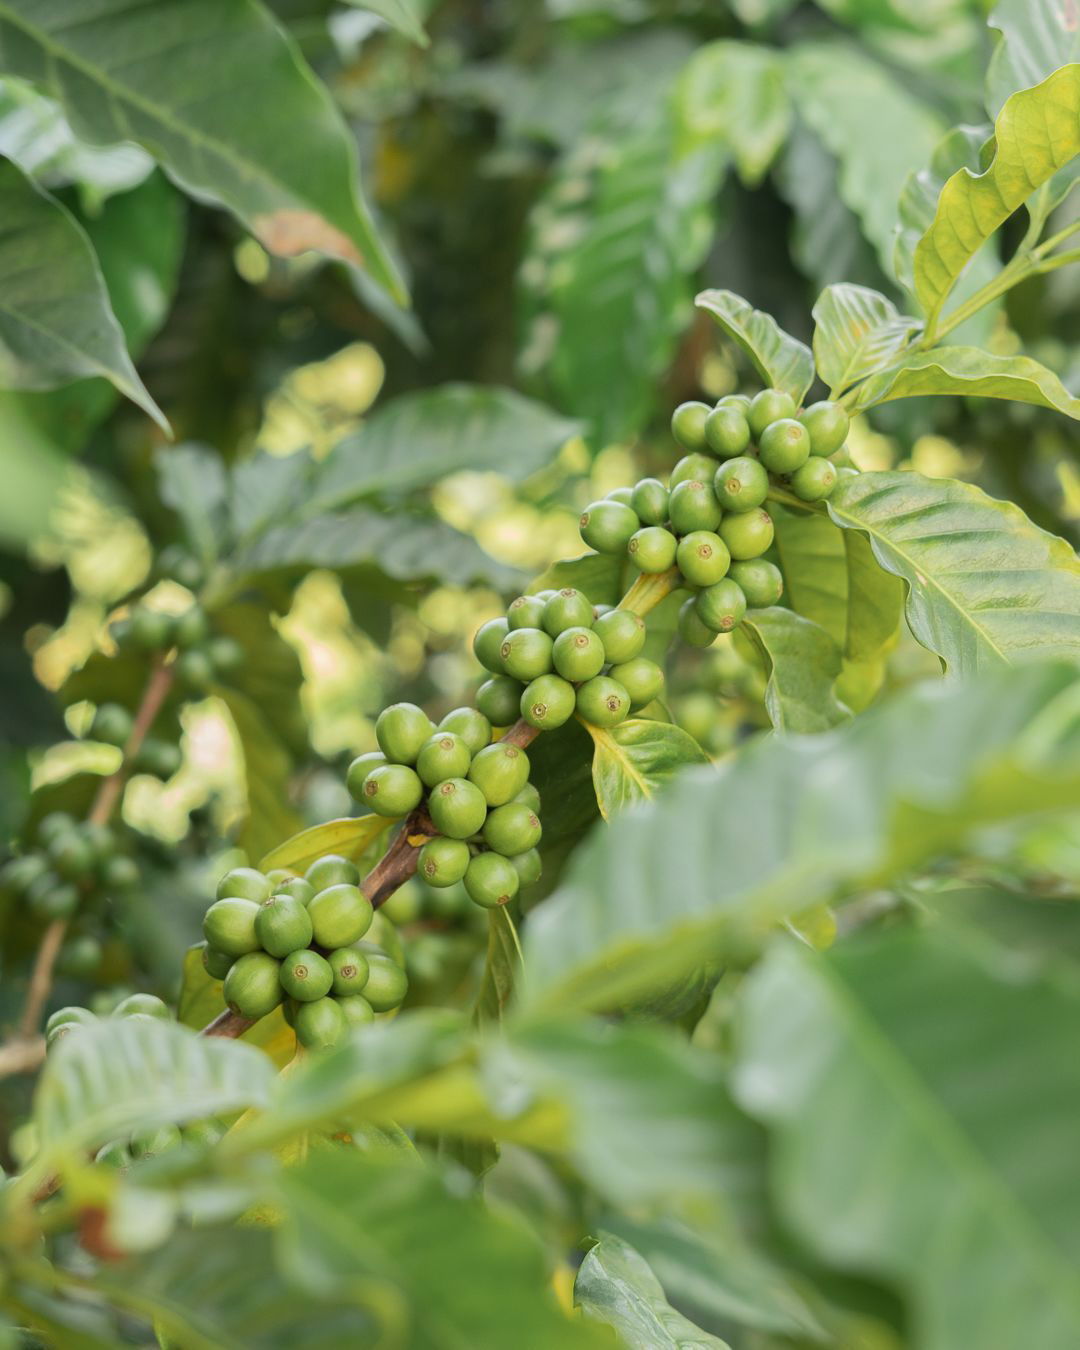 <i>Courtesy Miranda Edelmann via CNN Newsource</i><br/>An Arabica coffee plant grown by the Edelmann family